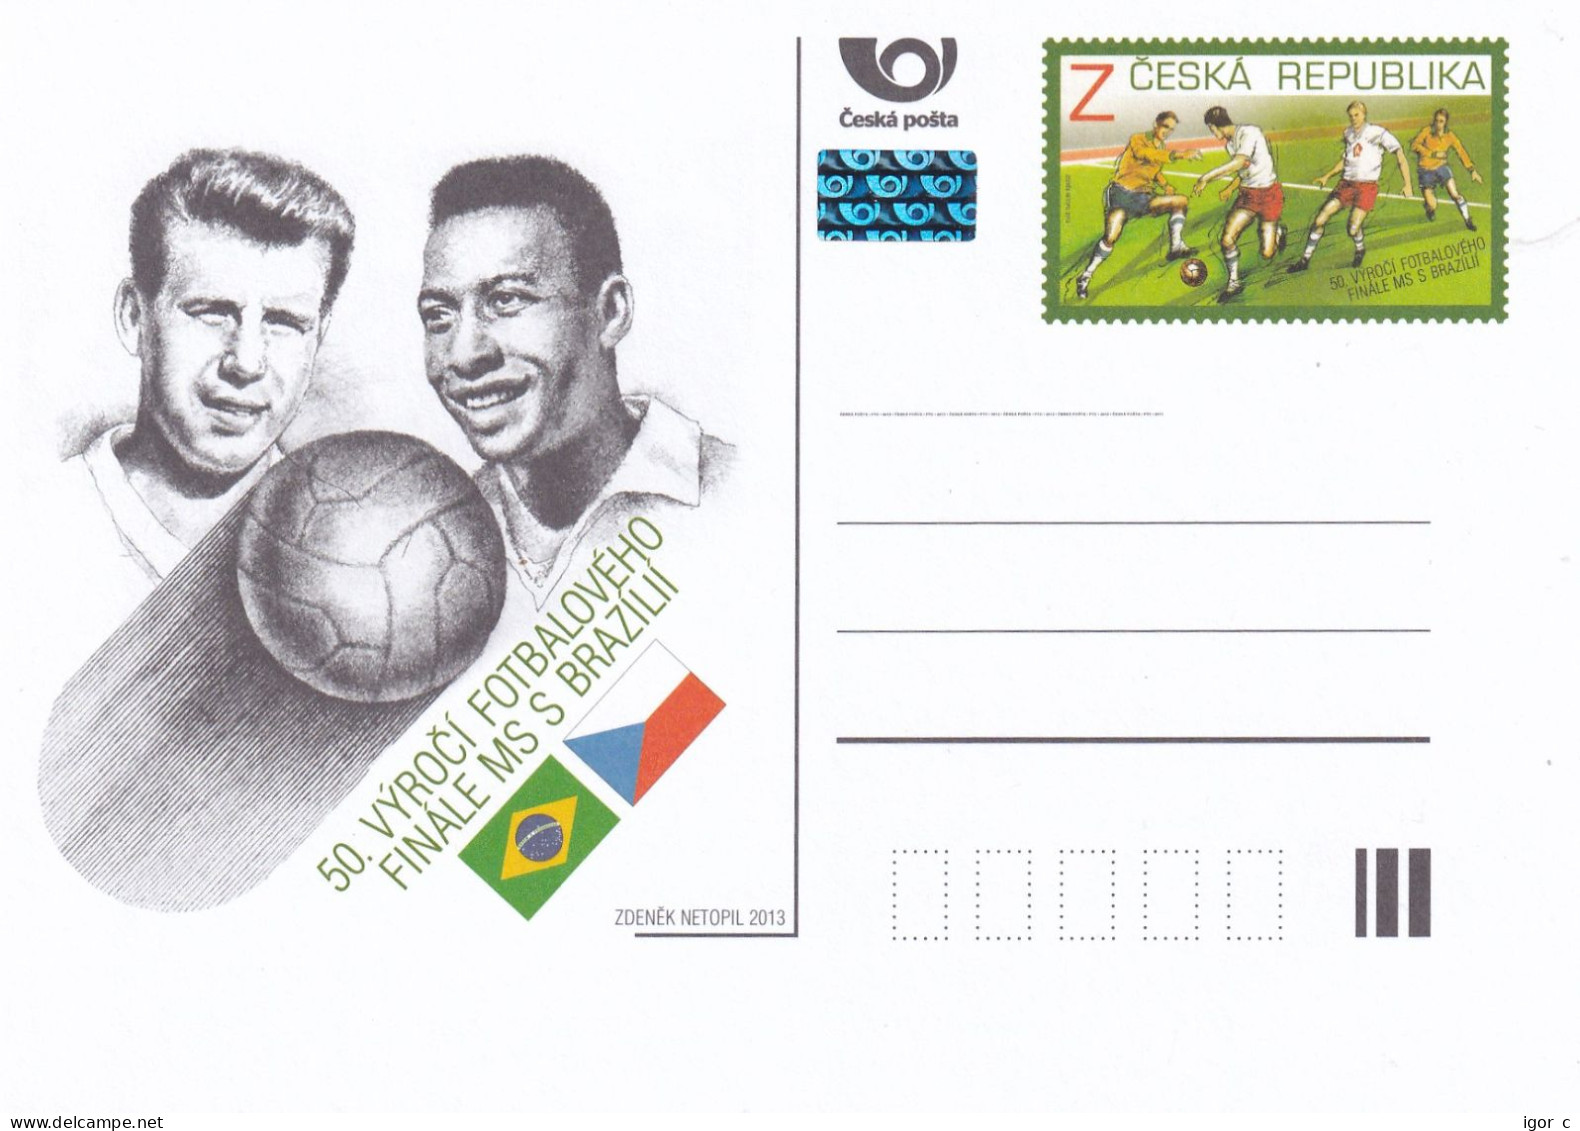 Czech Republic PS Card 2013: Football Fussball Soccer Calcio; FIFA World Cup Chille Chile Final Czechoslobvakia - Brazil - 1962 – Chile